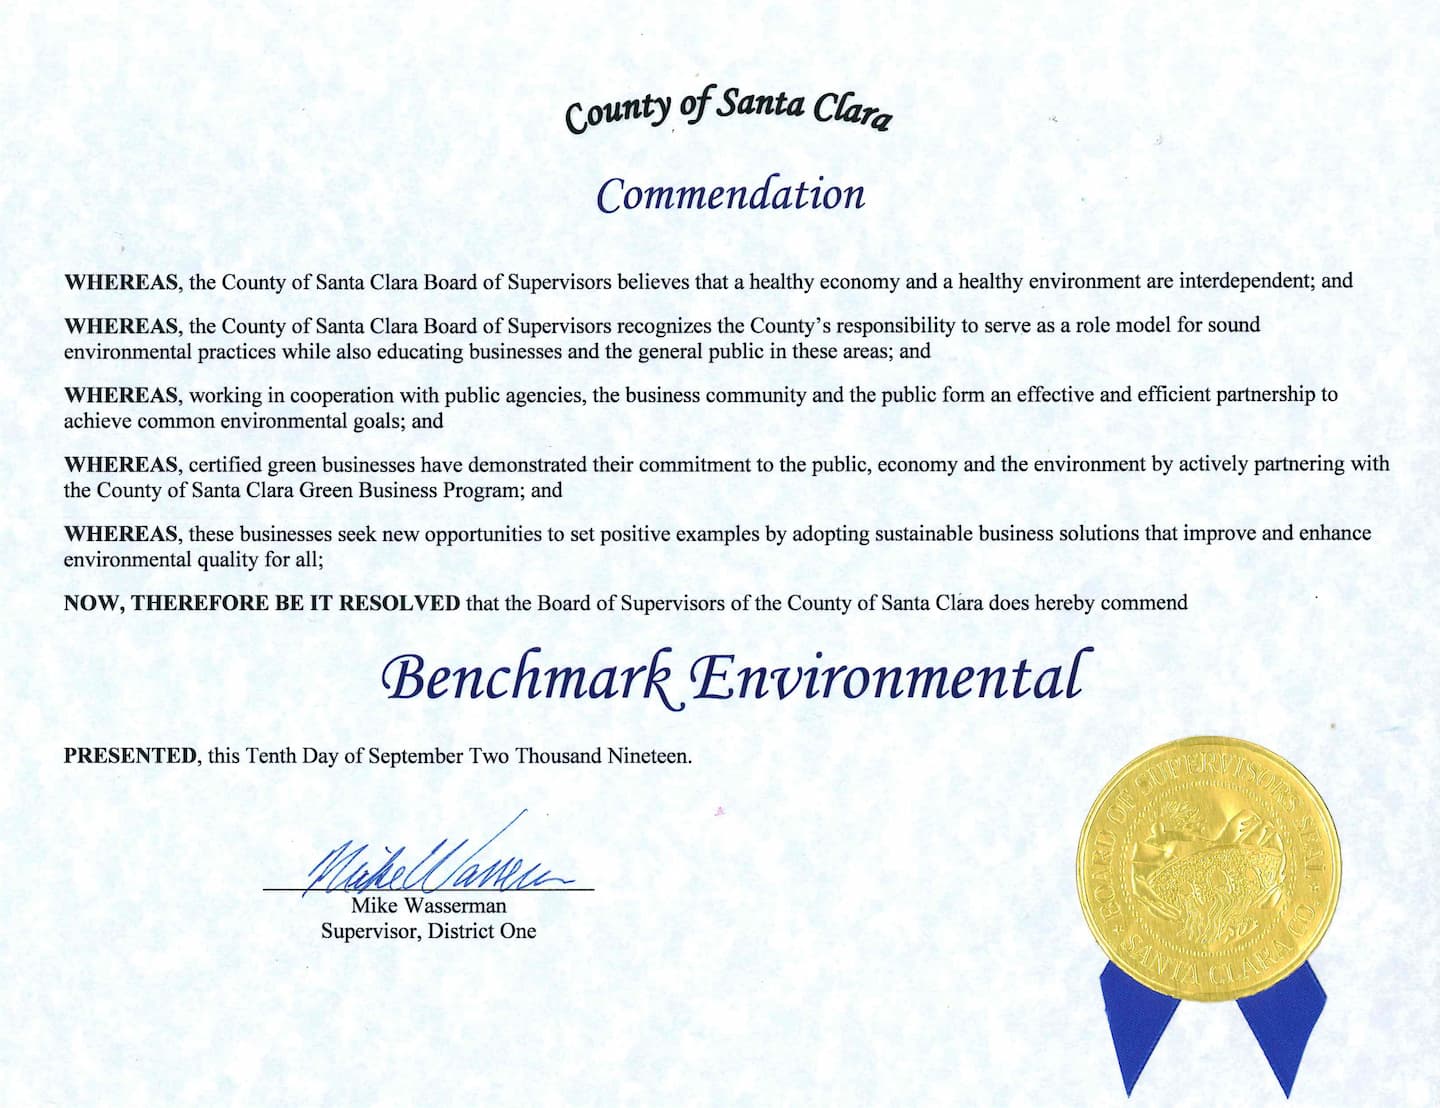 County of Santa Clara Commendation for Benchmark Environmental